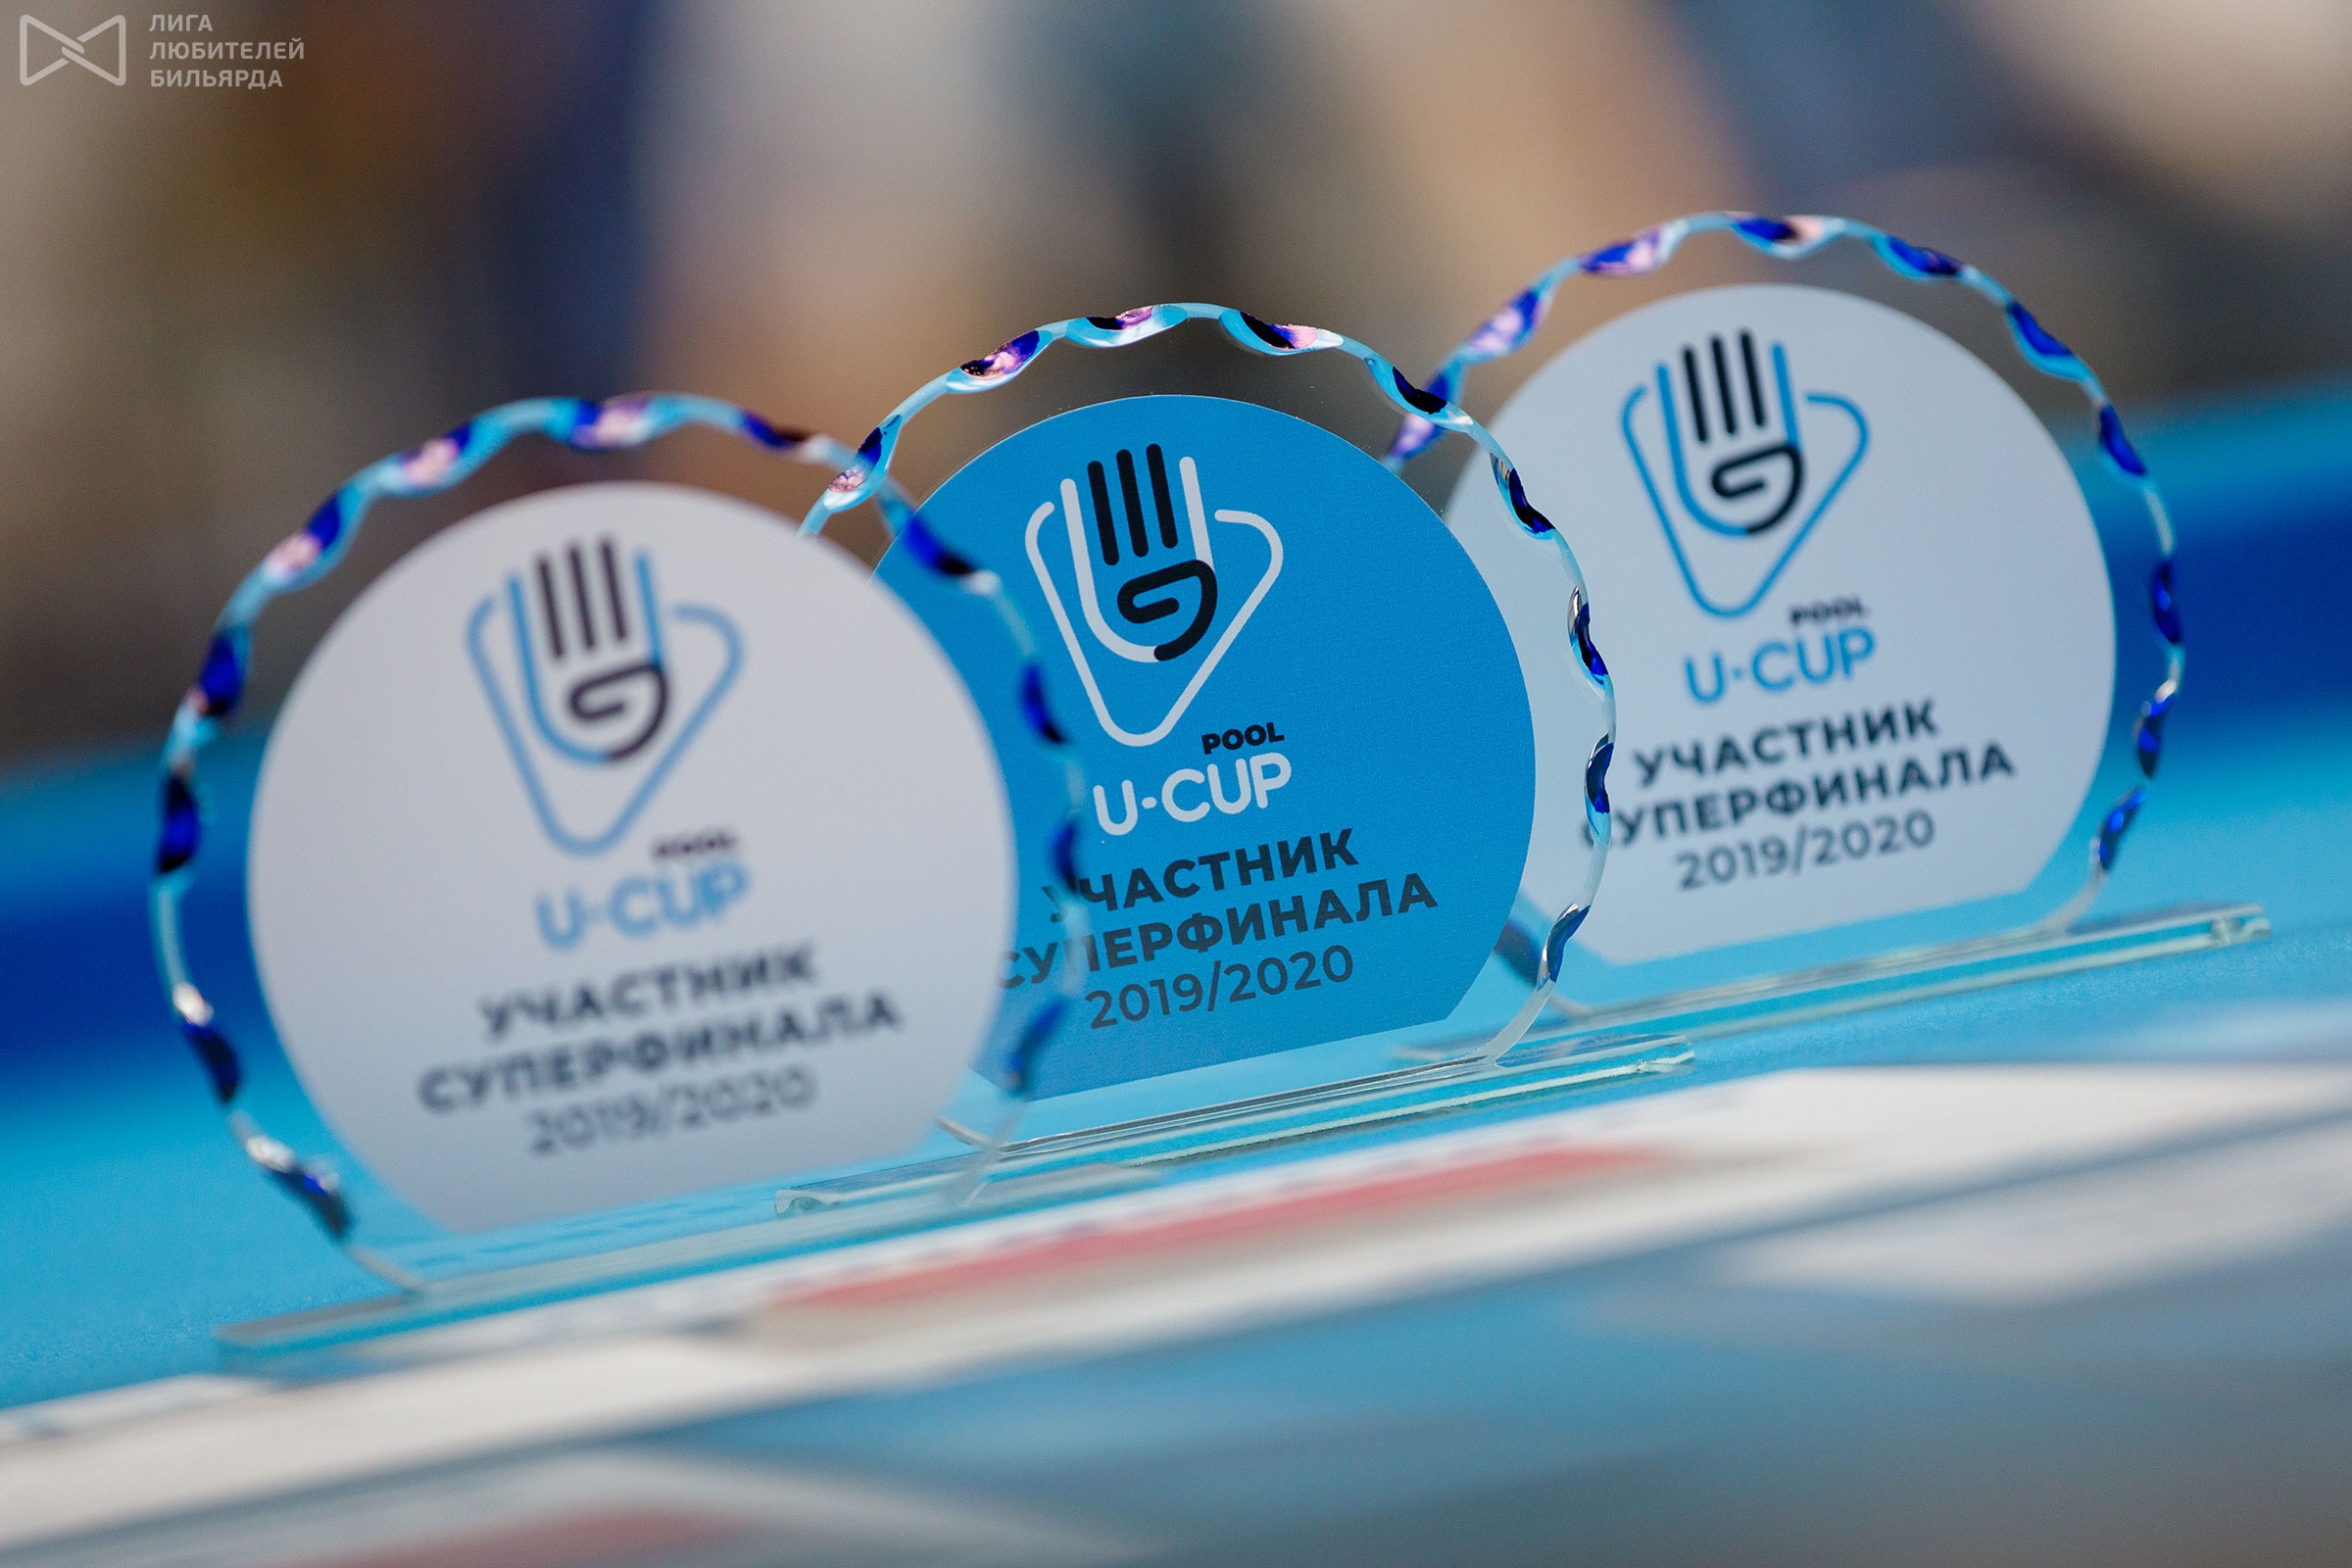 U cup. Кубок вузов СПБ. Peterburg Cup u9. U Cup natural.